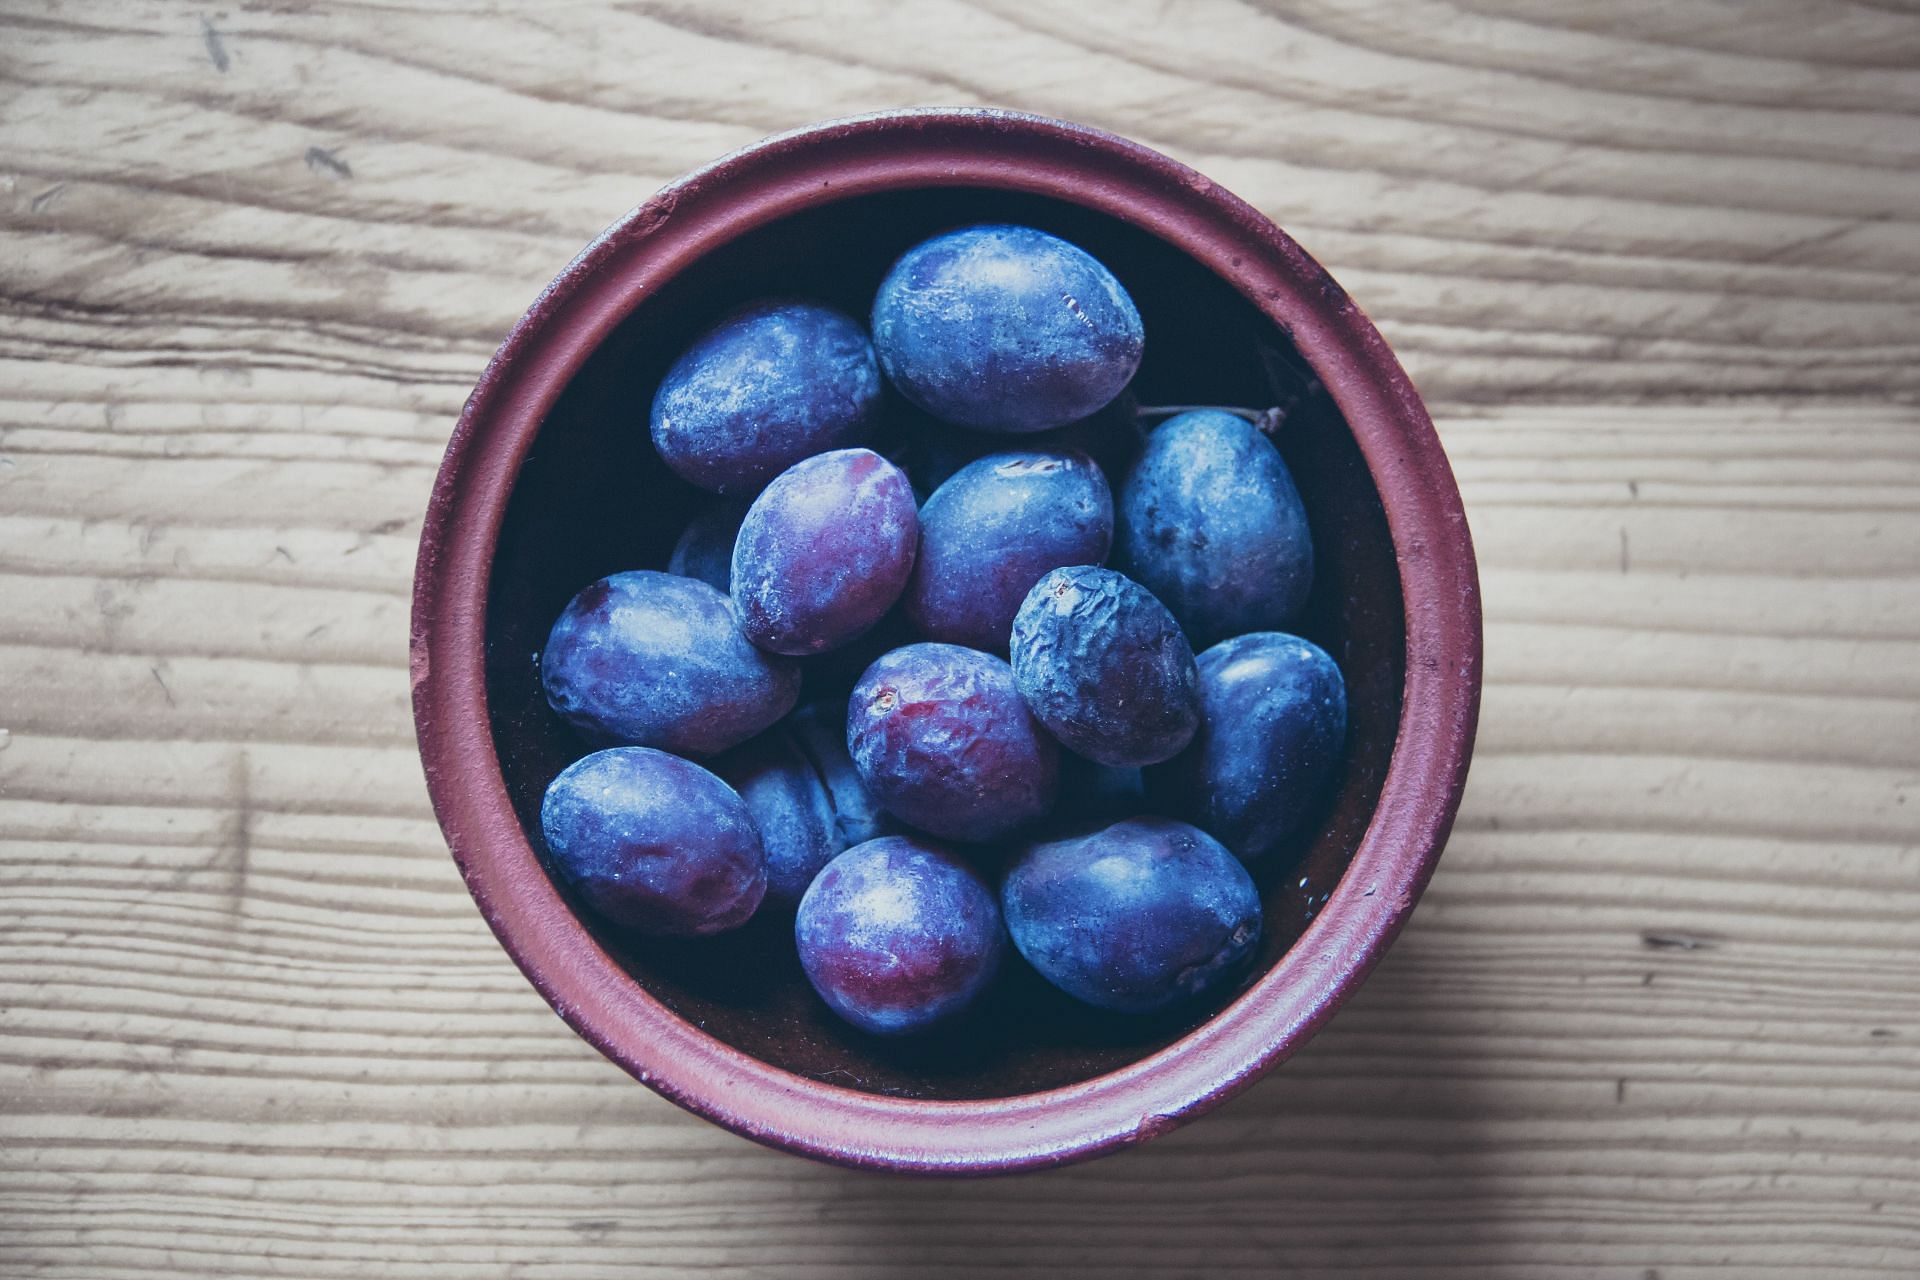 Prune juice is made by dried plums. (Image via Pexels/ Pixabay)